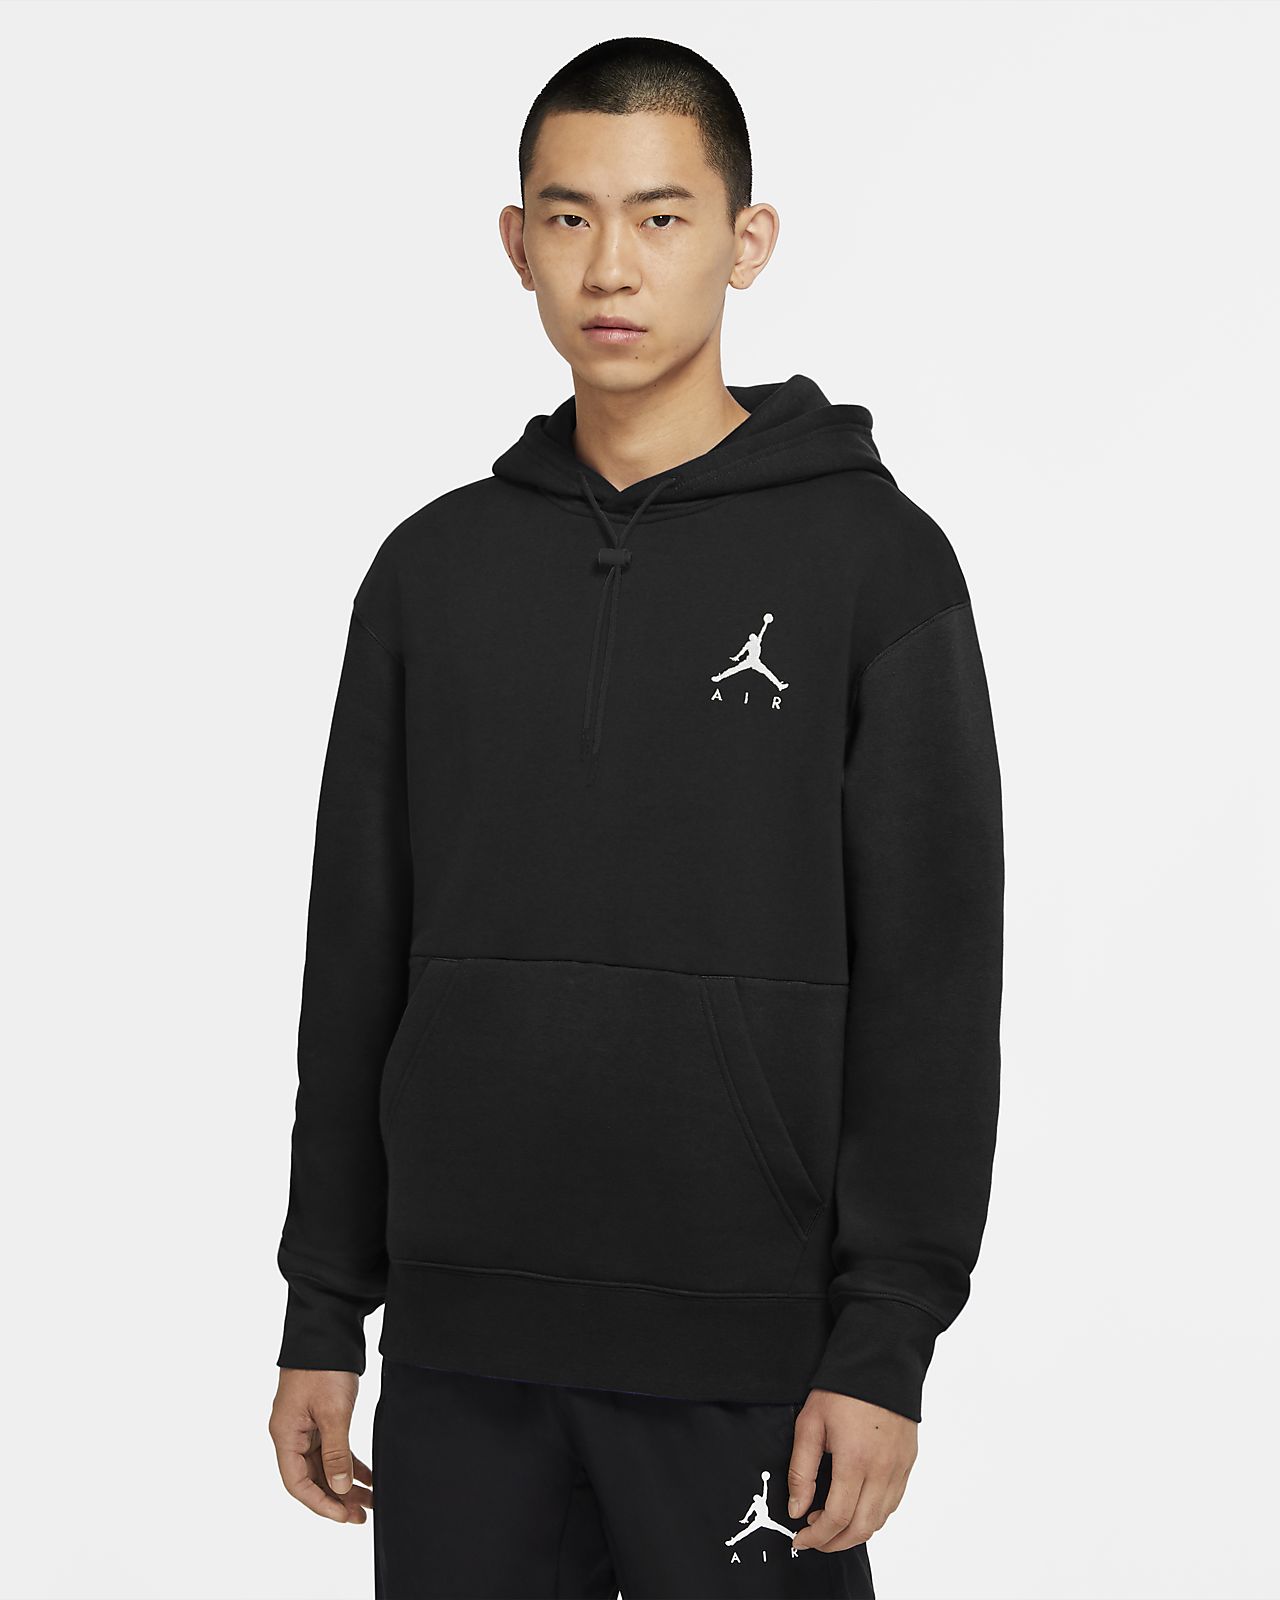  Jordan  Jumpman Air Men s Fleece Pullover Hoodie  Nike com